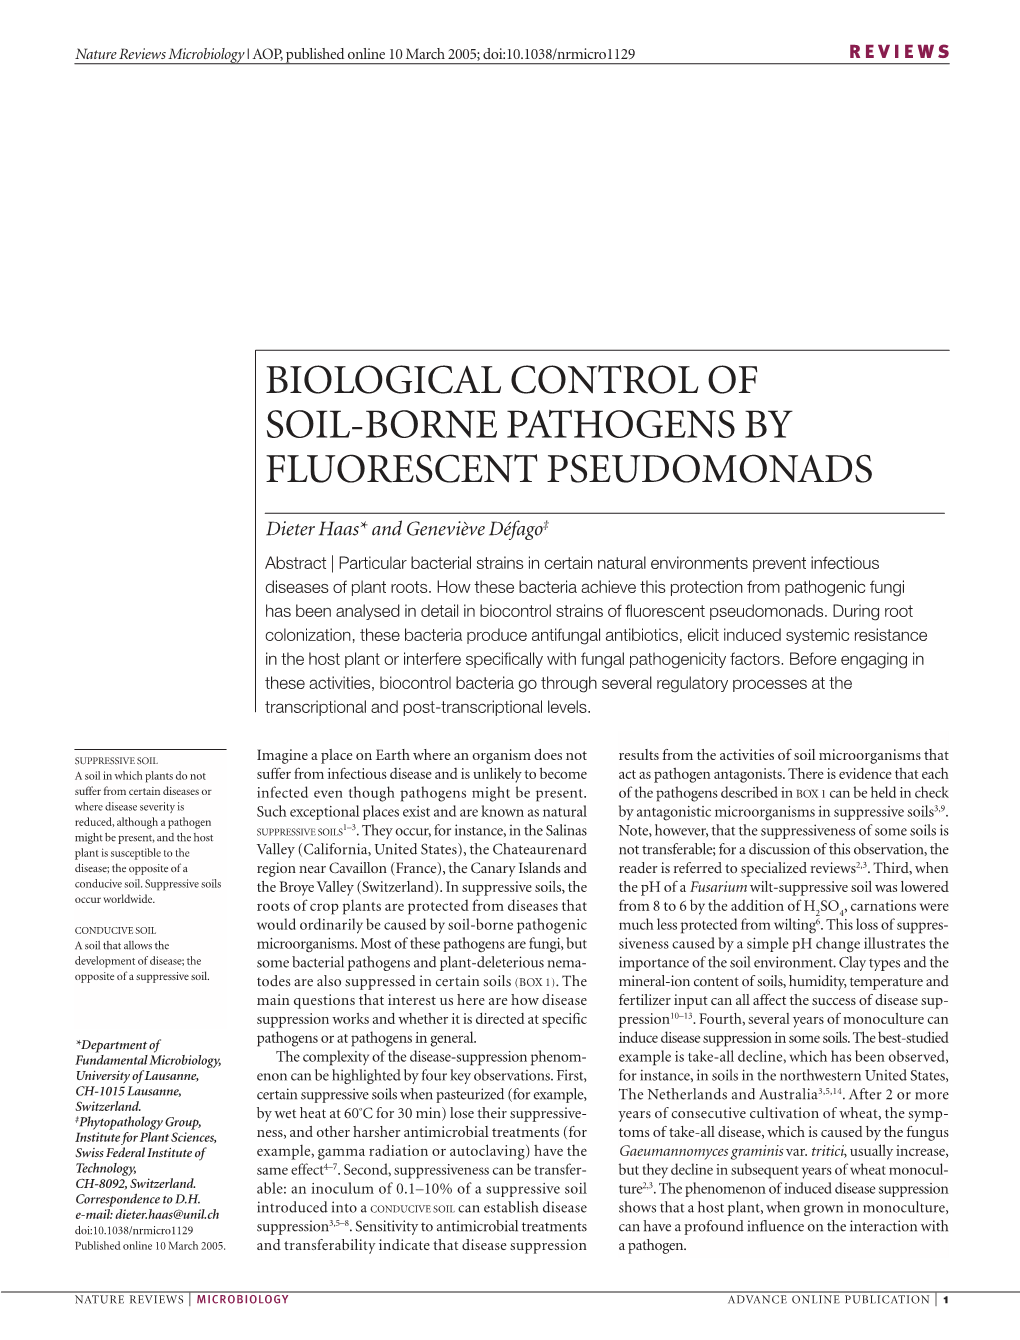 Biological Control of Soil-Borne Pathogens by Fluorescent Pseudomonads